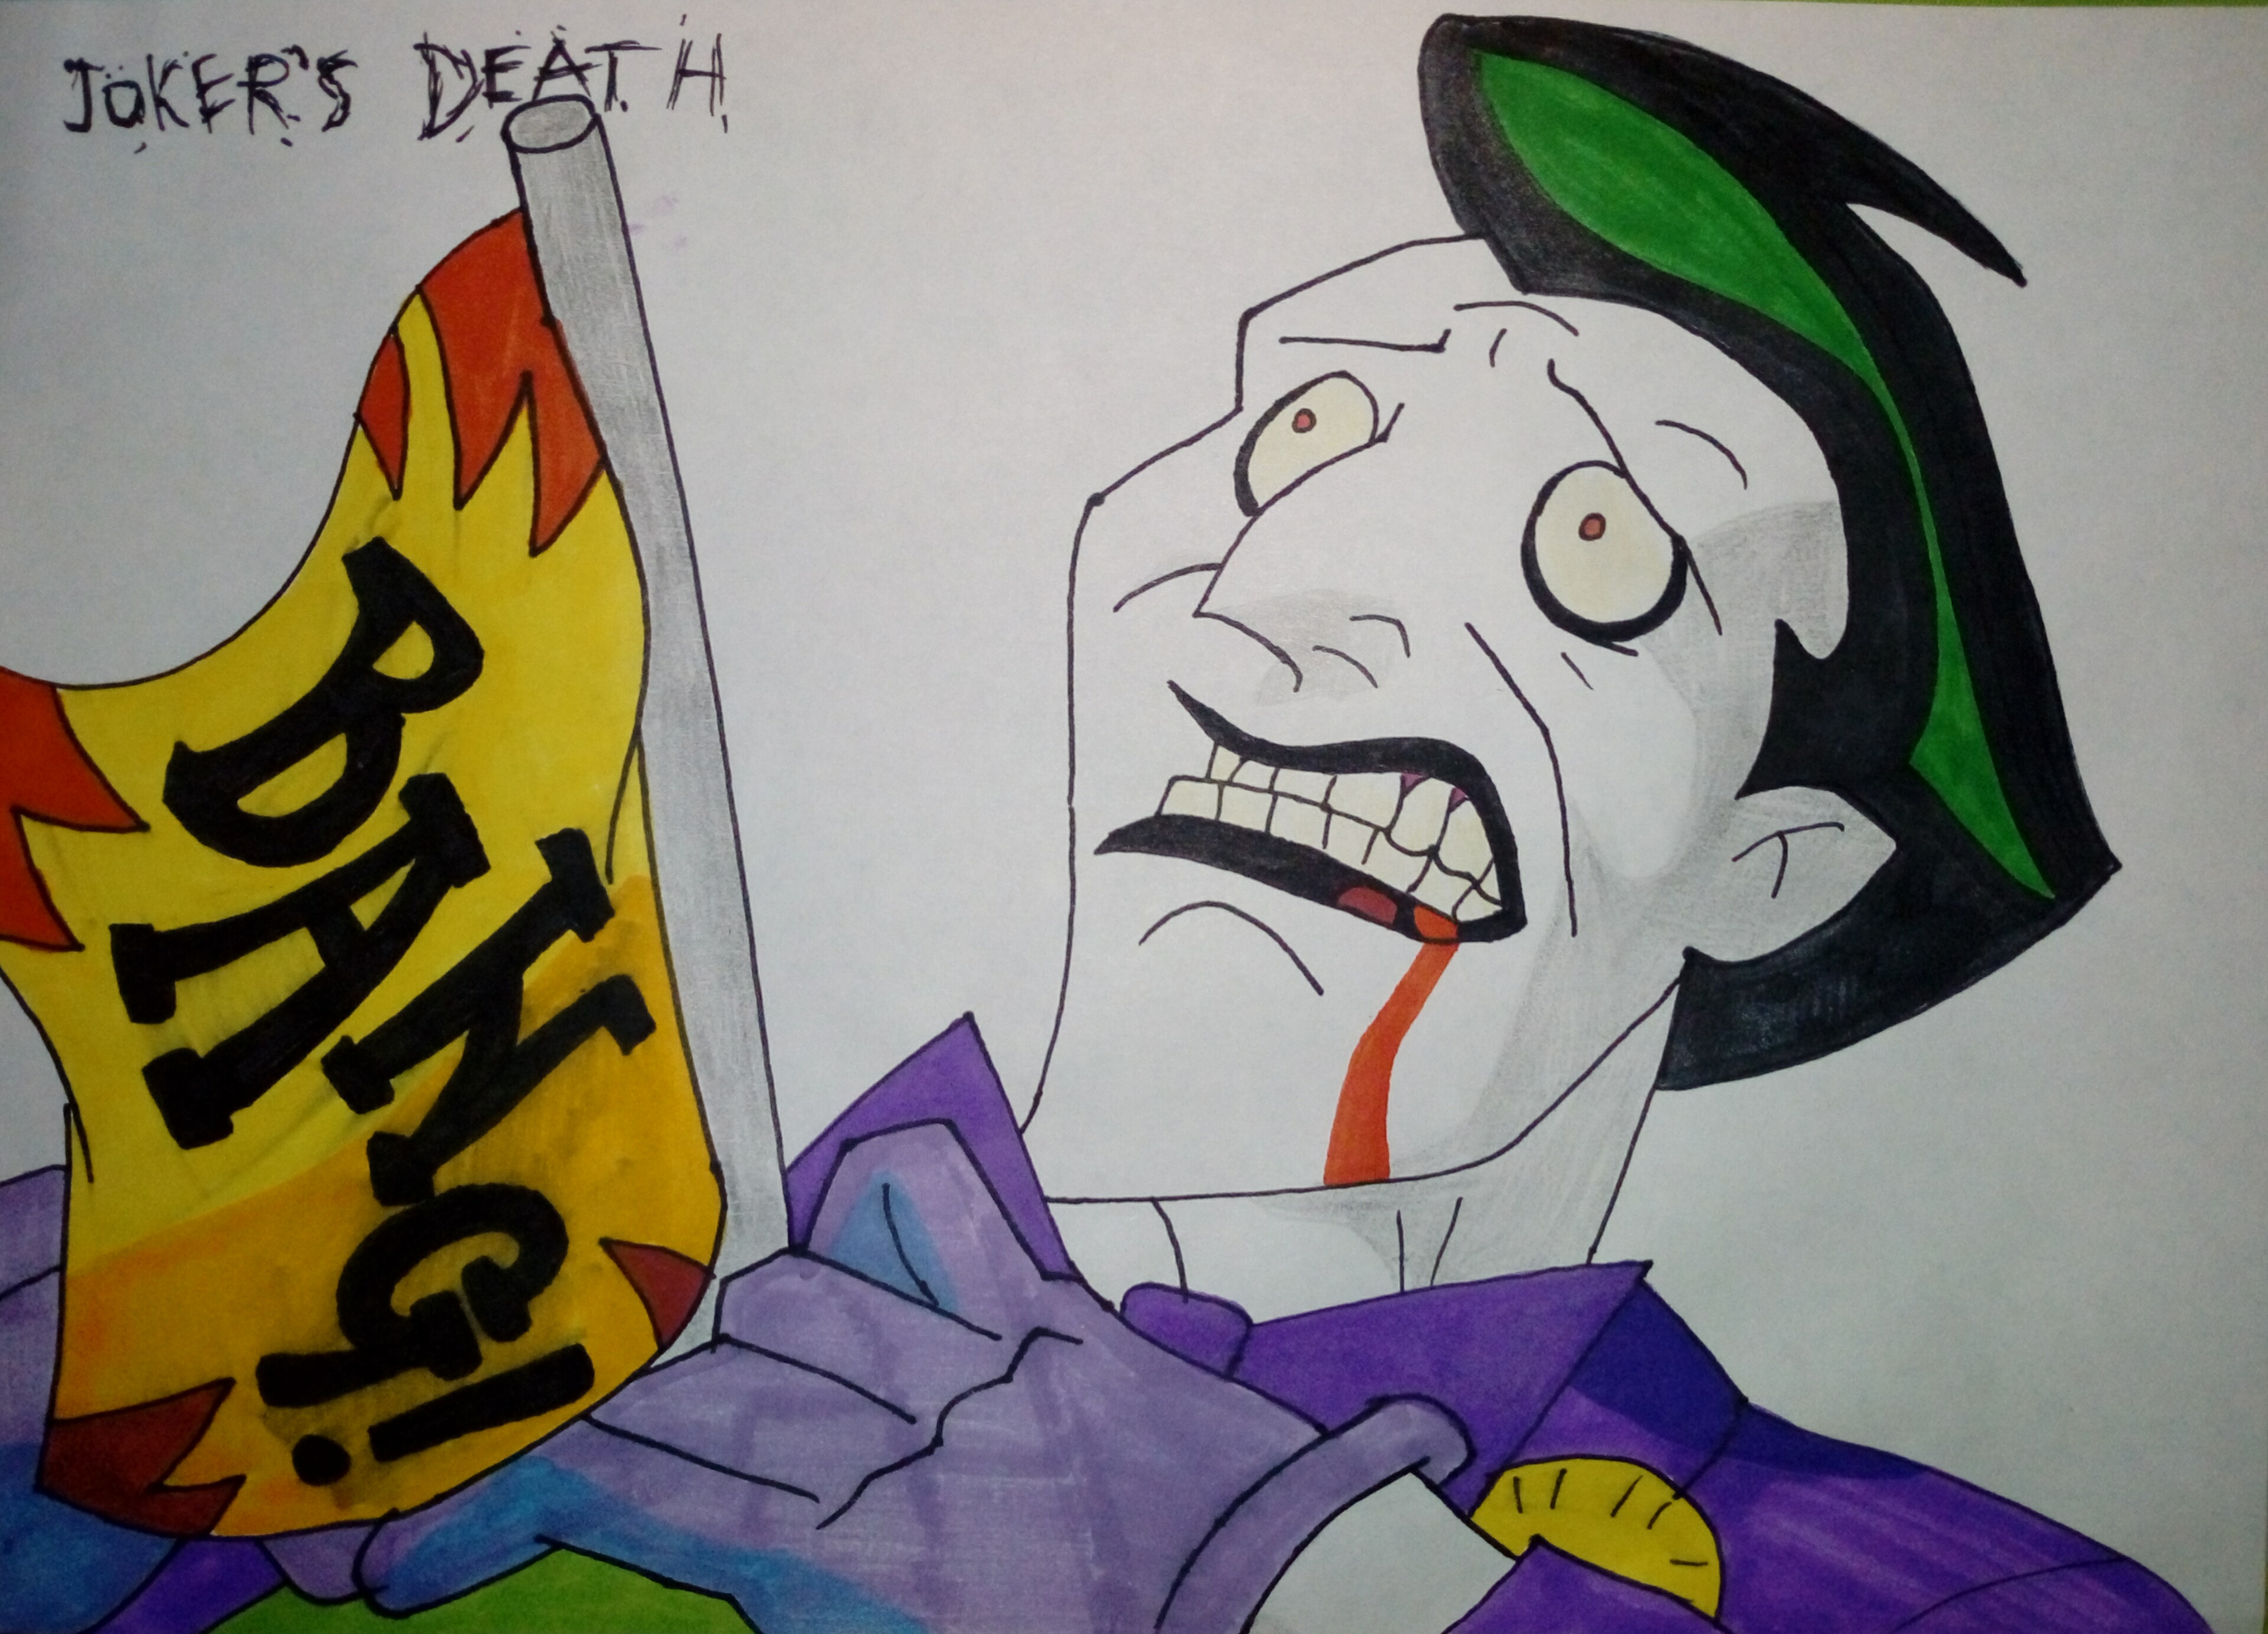 Joker's Death by JustSomePainter11 on DeviantArt